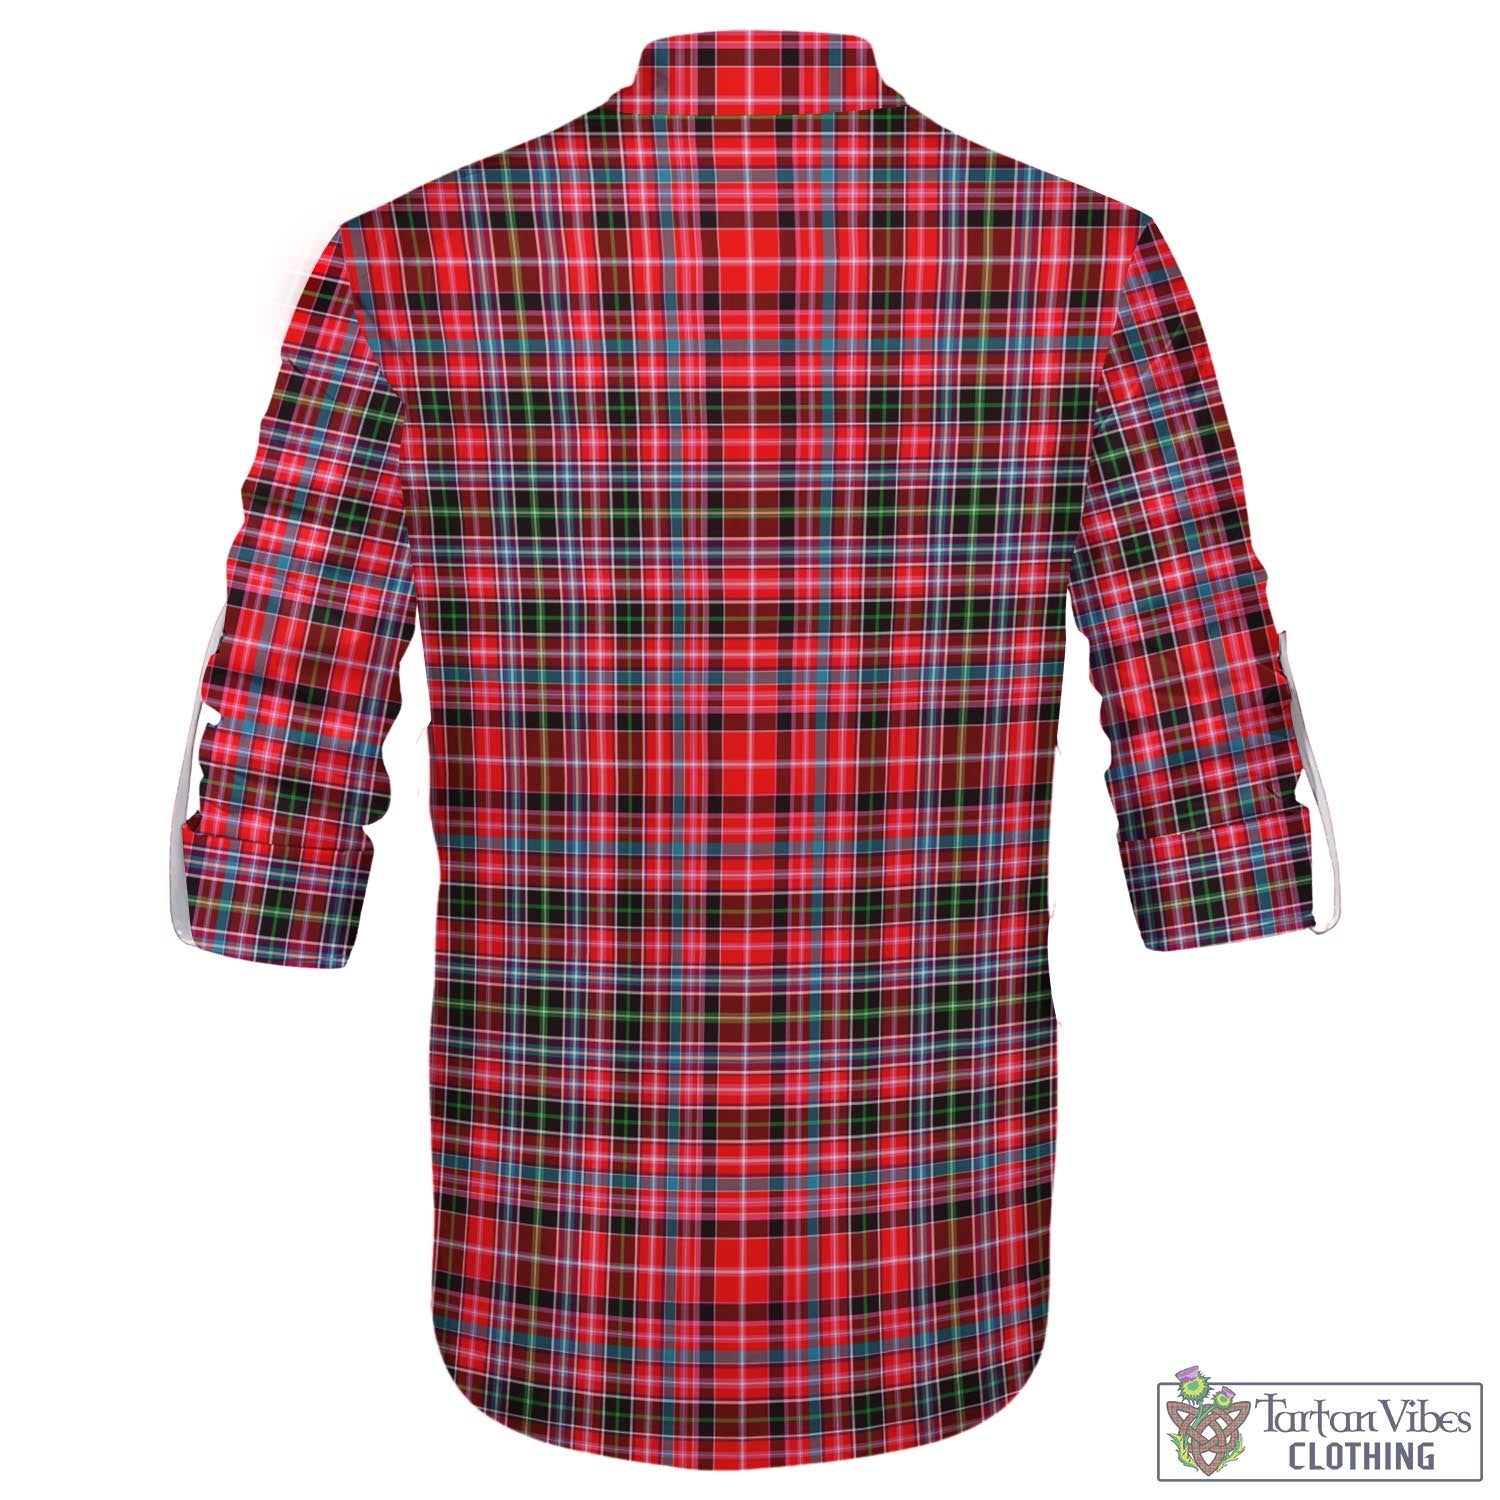 Tartan Vibes Clothing Aberdeen District Tartan Men's Scottish Traditional Jacobite Ghillie Kilt Shirt